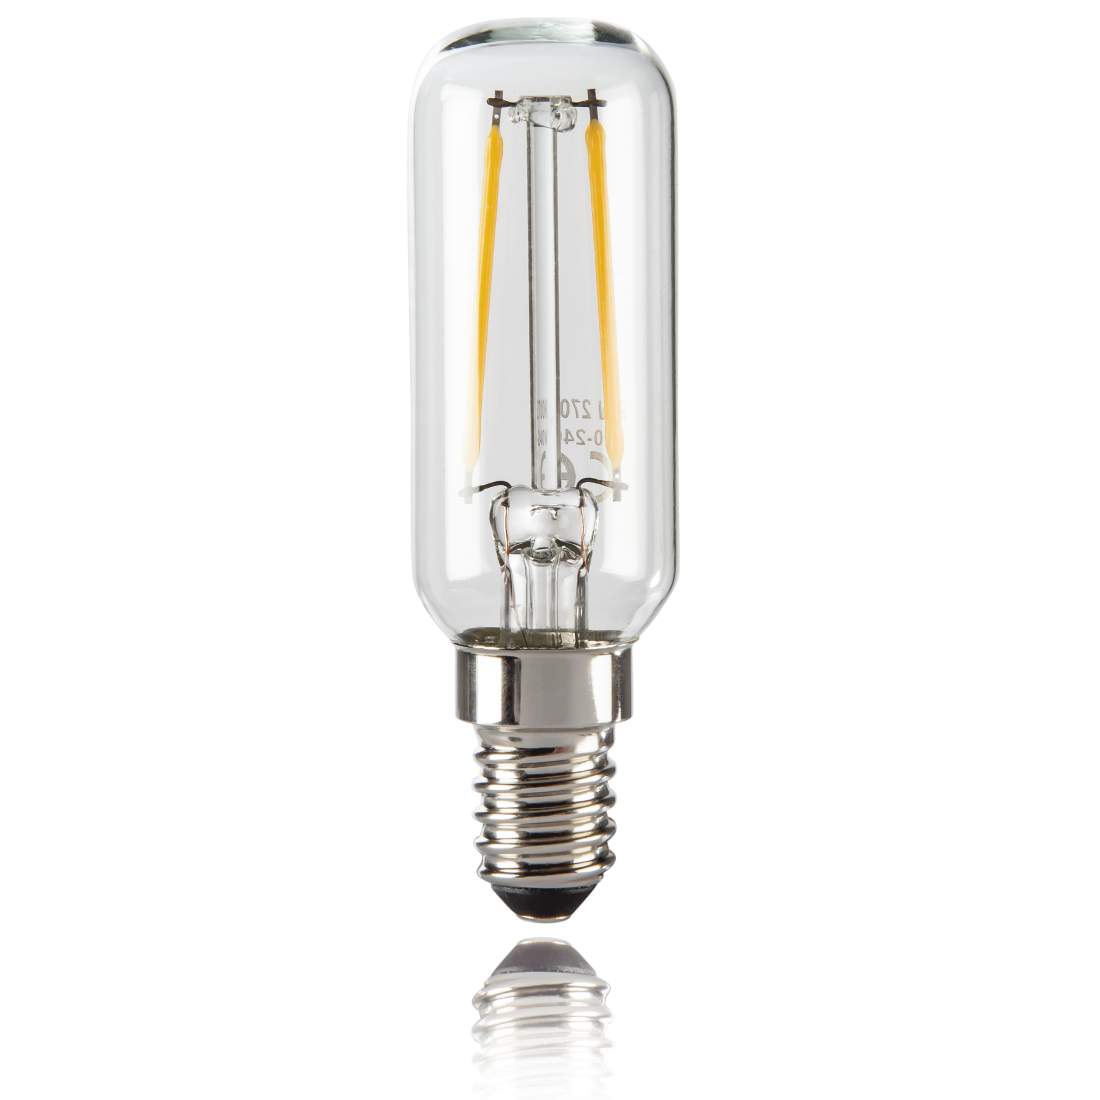 abx Druckfähige Abbildung - Xavax, LED-Filament, E14, 250lm ersetzt 25W, Röhrenlampe, Kühlschrank/Dunstabzug